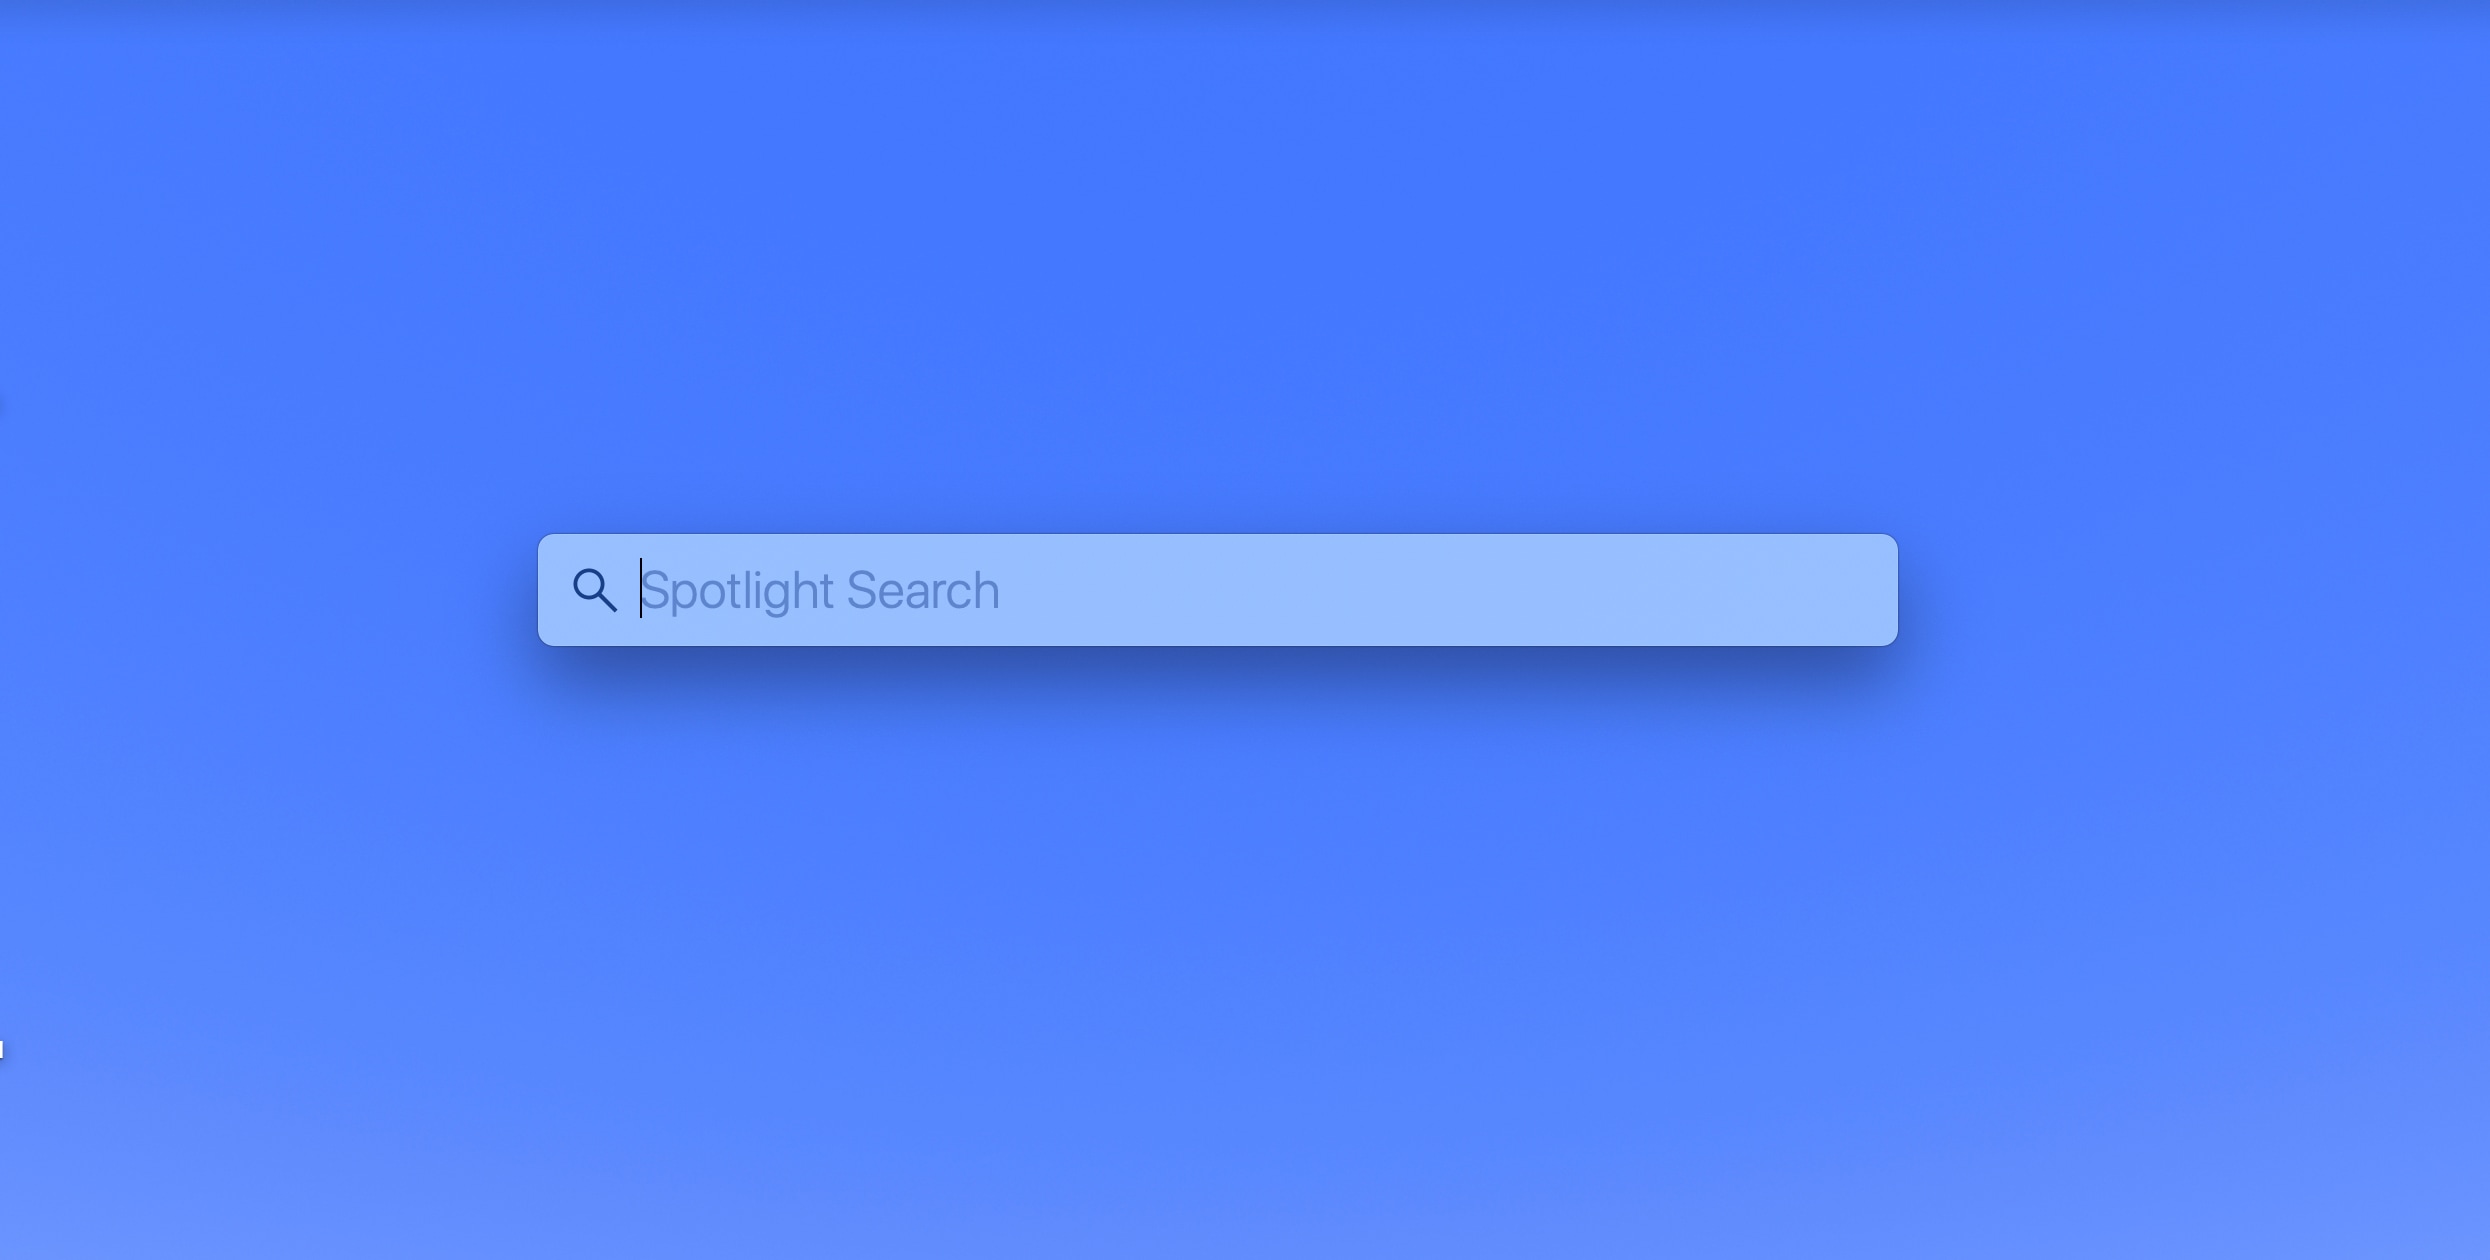 Spotlight Search Mac